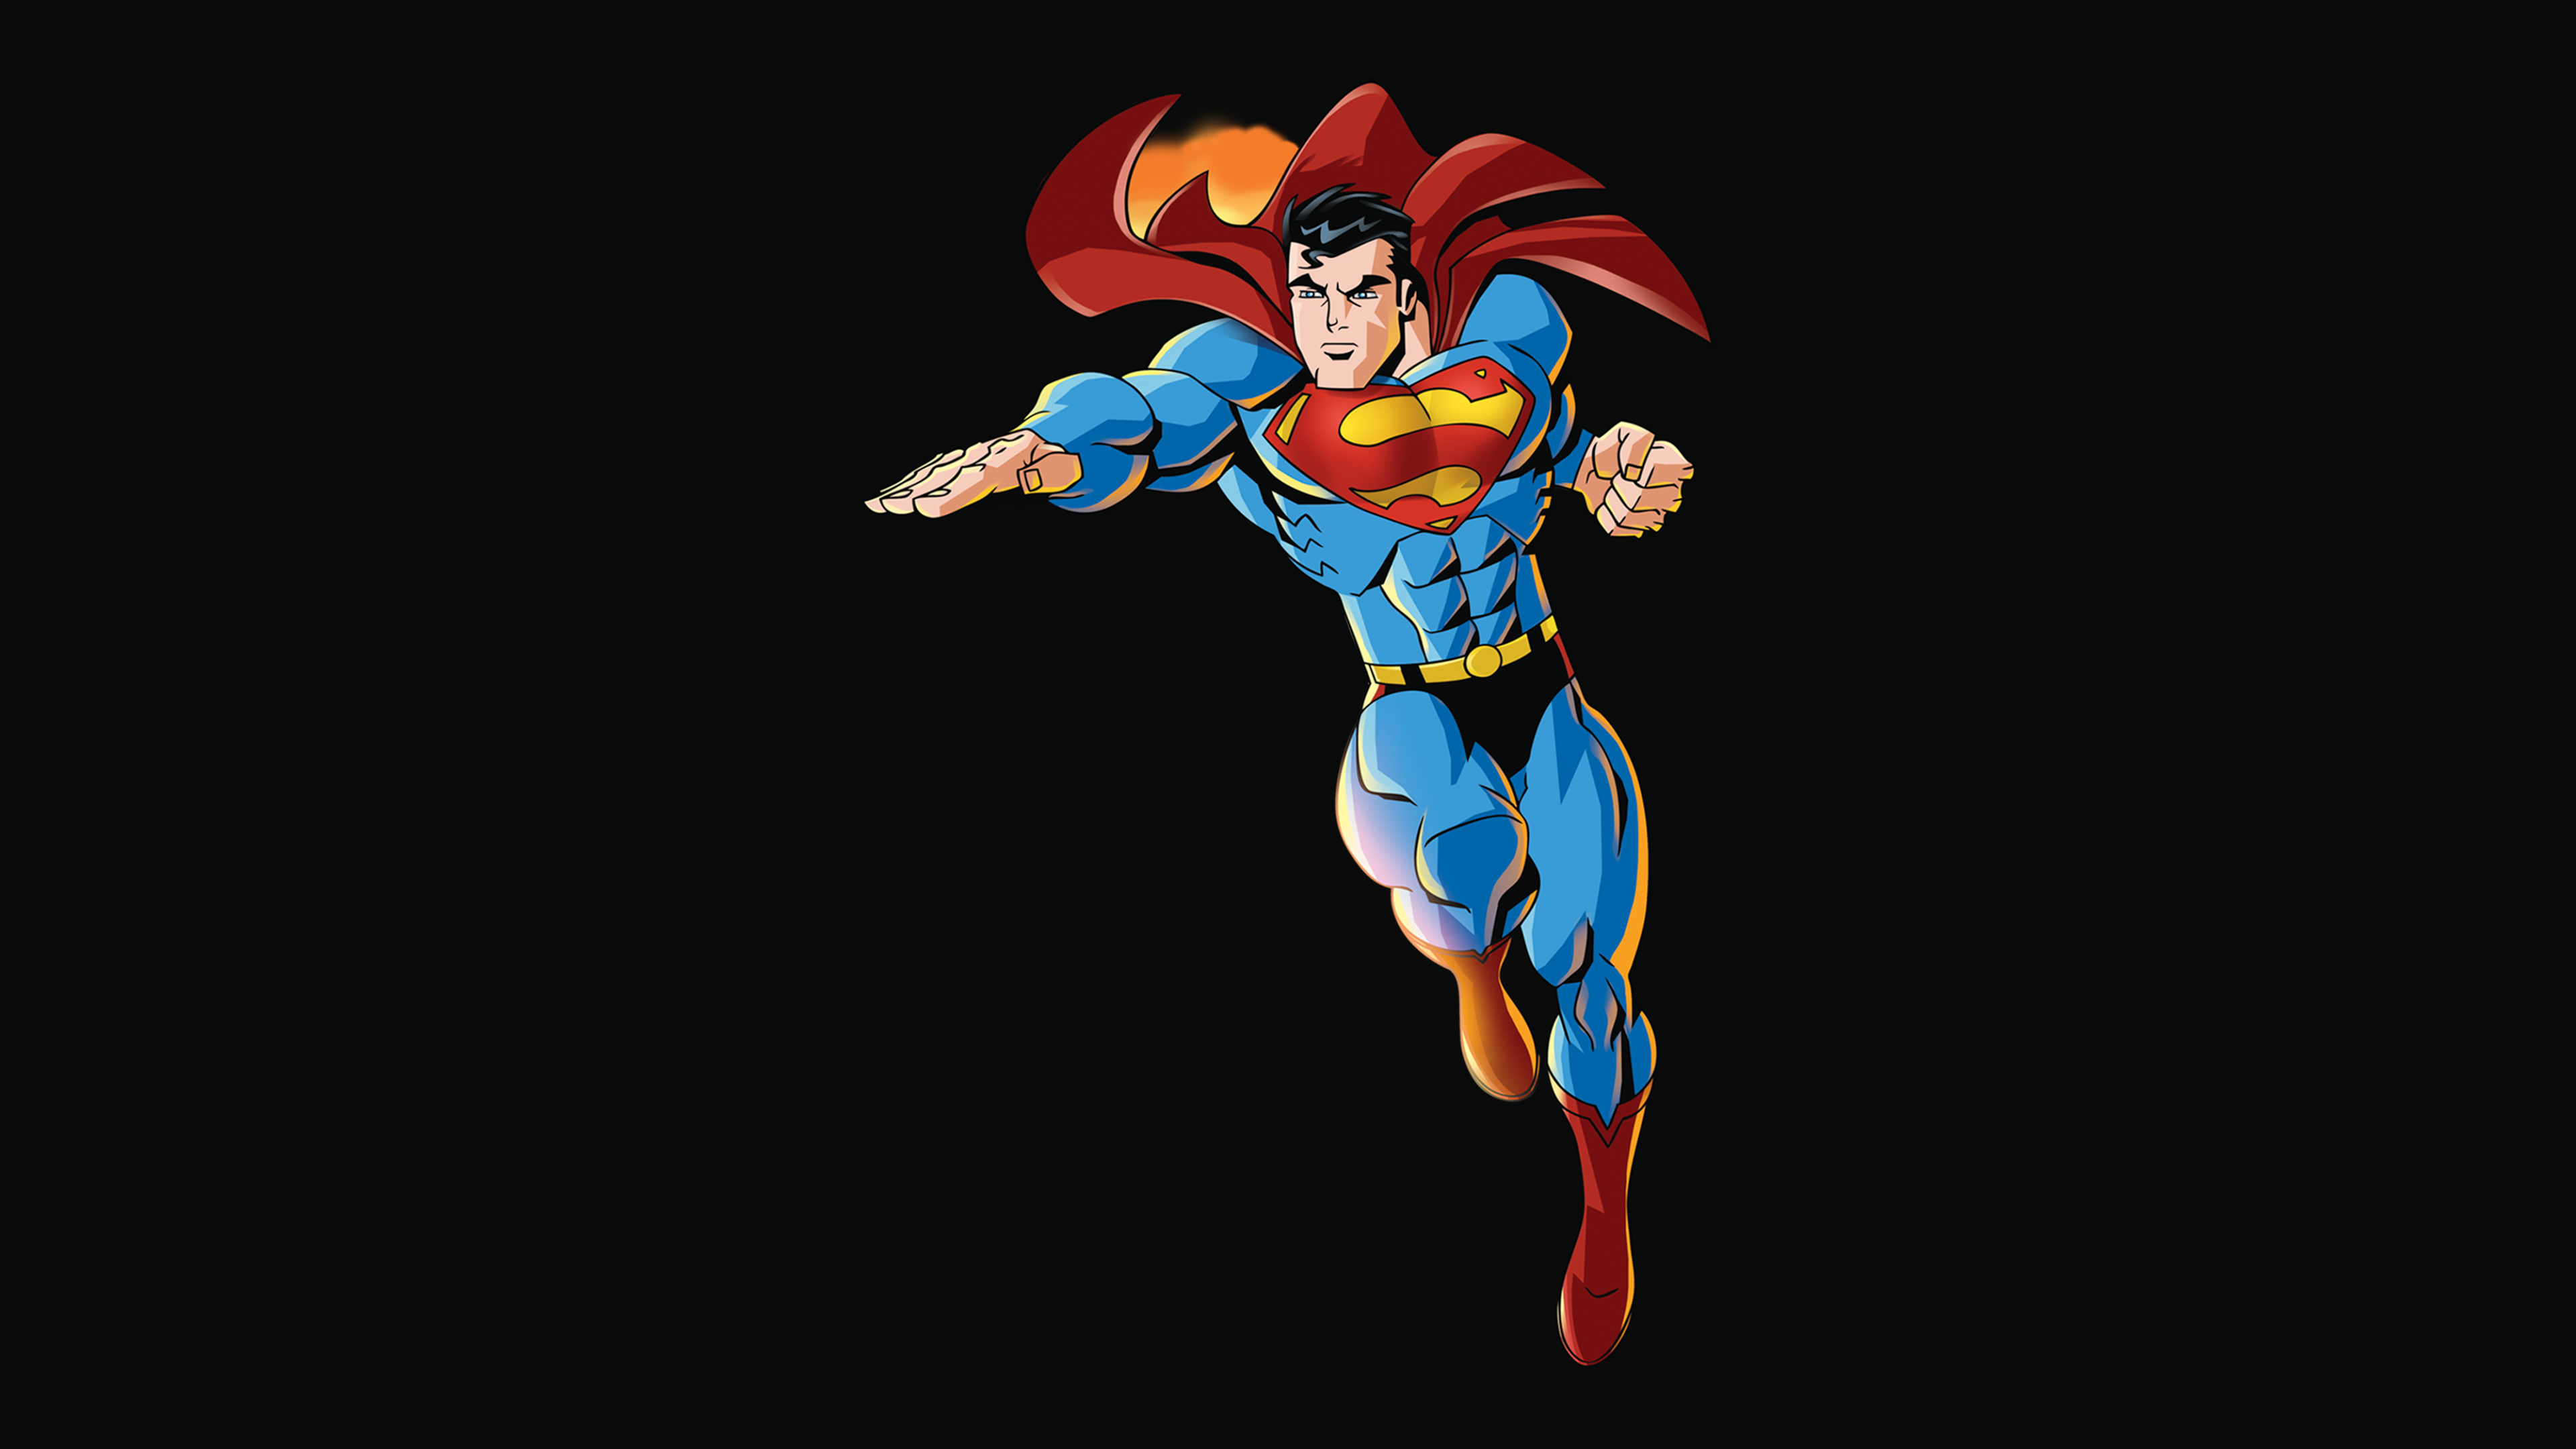 Wallpaper Superman, Superhero, DC Comics, Dark background, Black, 4K, Creative Graphics / Editor's Picks,. Wallpaper for iPhone, Android, Mobile and Desktop